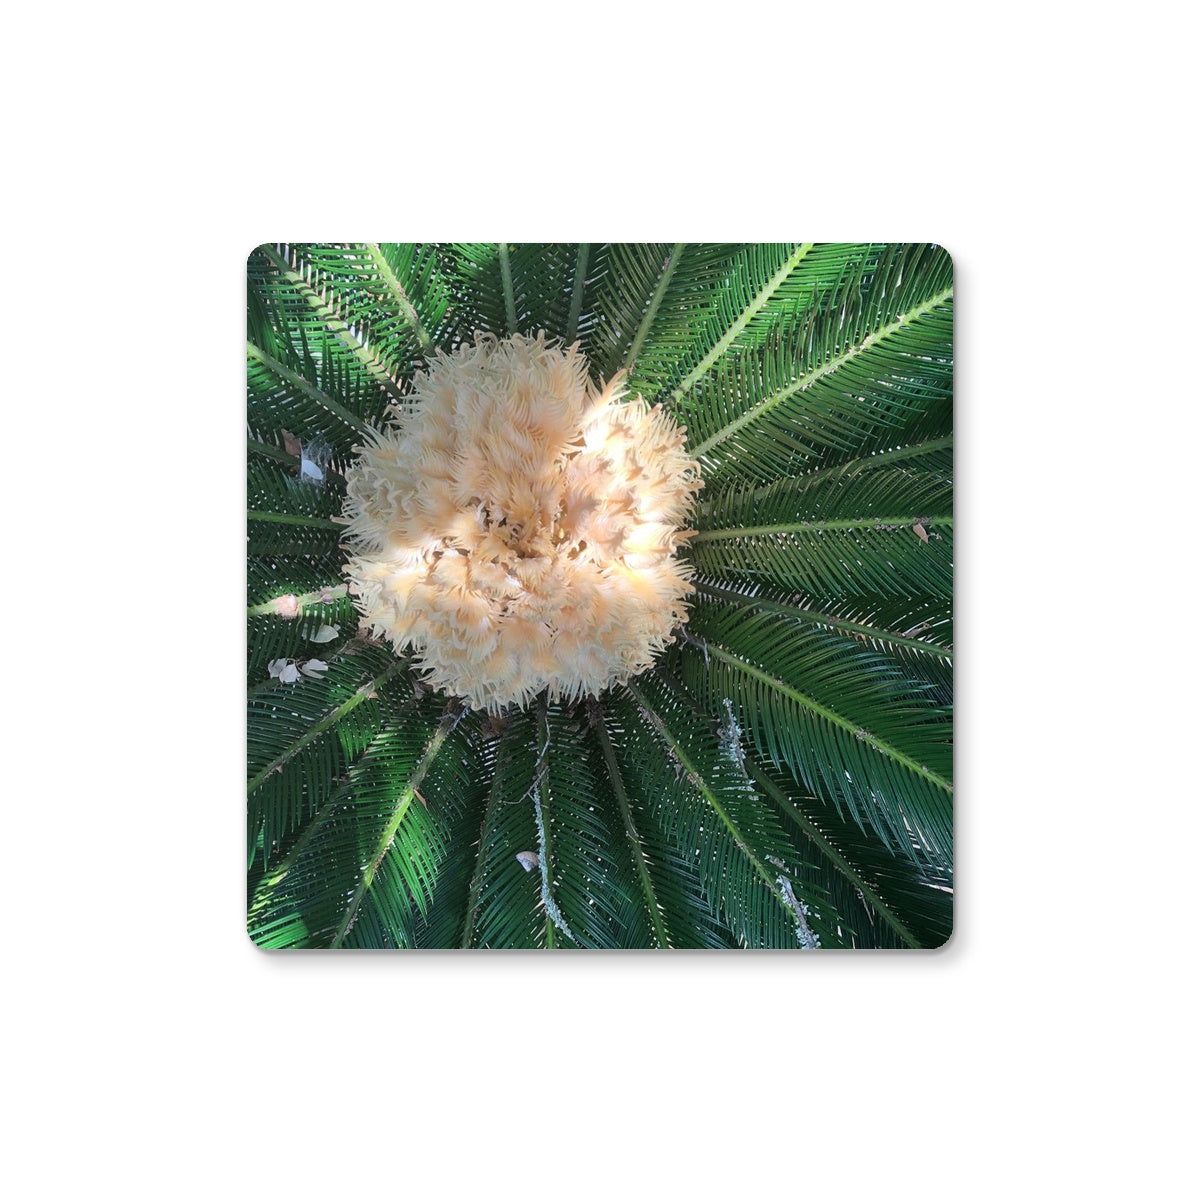 Sago Palm on Sunbelt Coaster